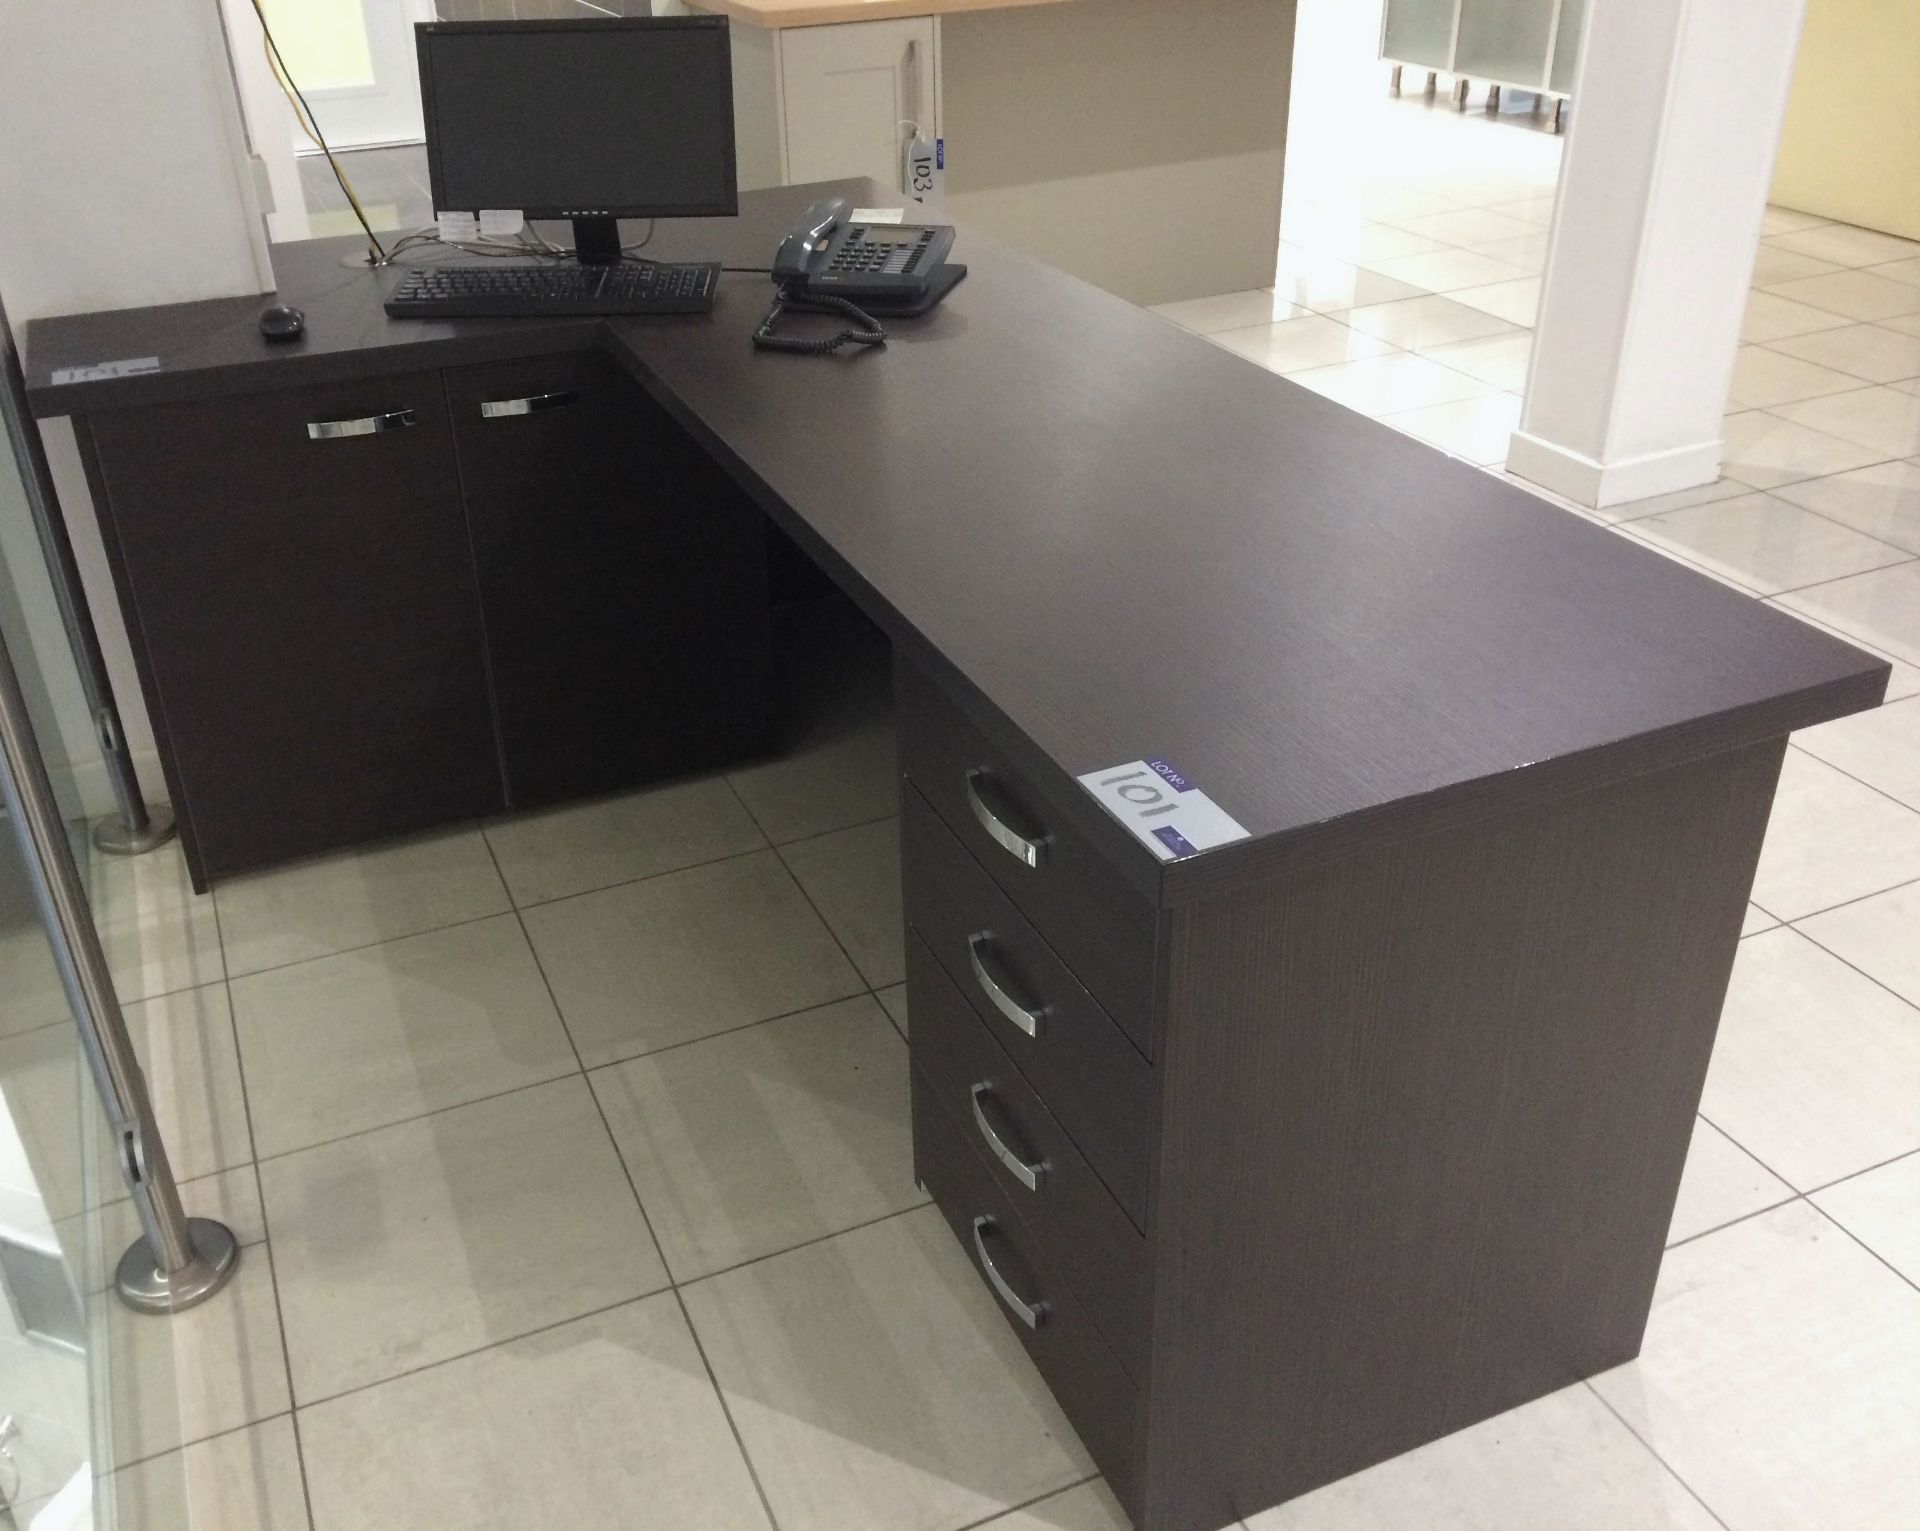 A JJO Avola Truffle L Shape Desk, 2190 x 660/730 x 660 x 785mm h with 4 drawer Pedestal, 535mm w and